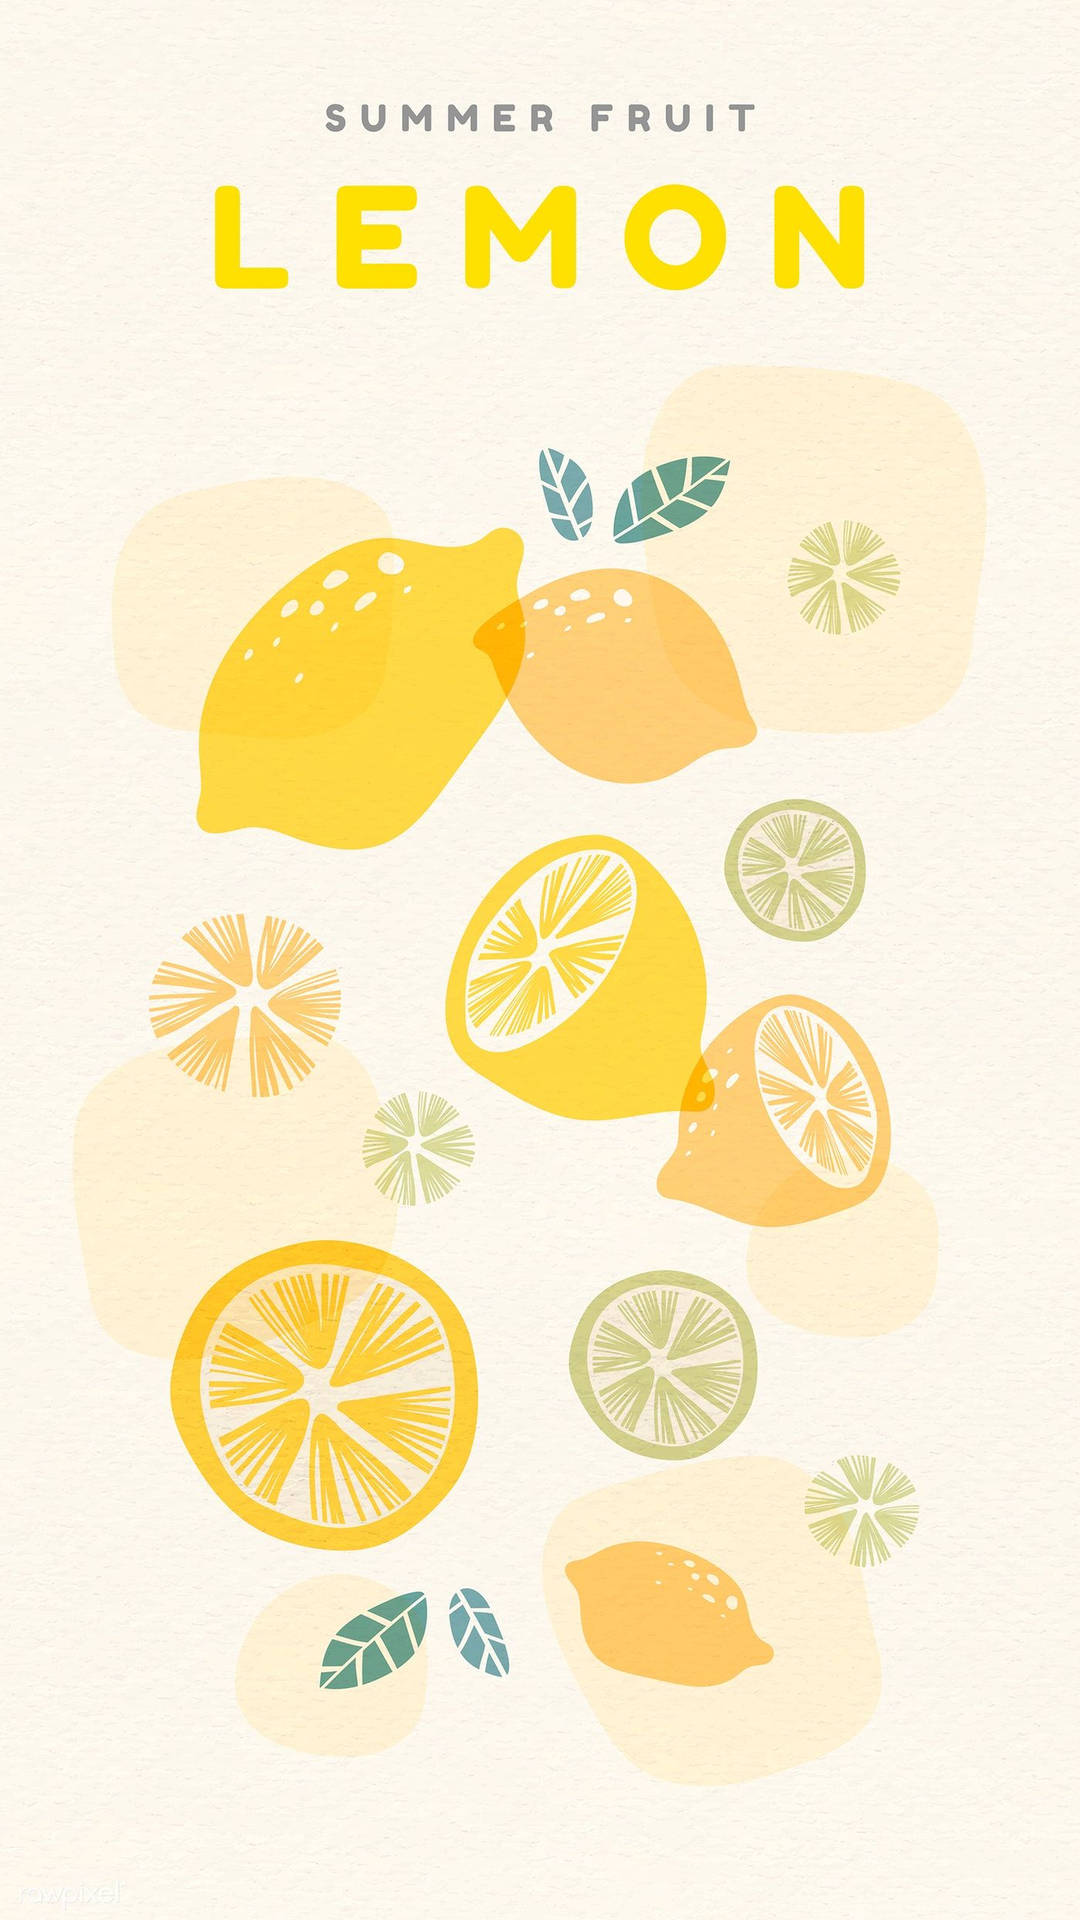 Refreshingly Zesty: A Summer Lemon